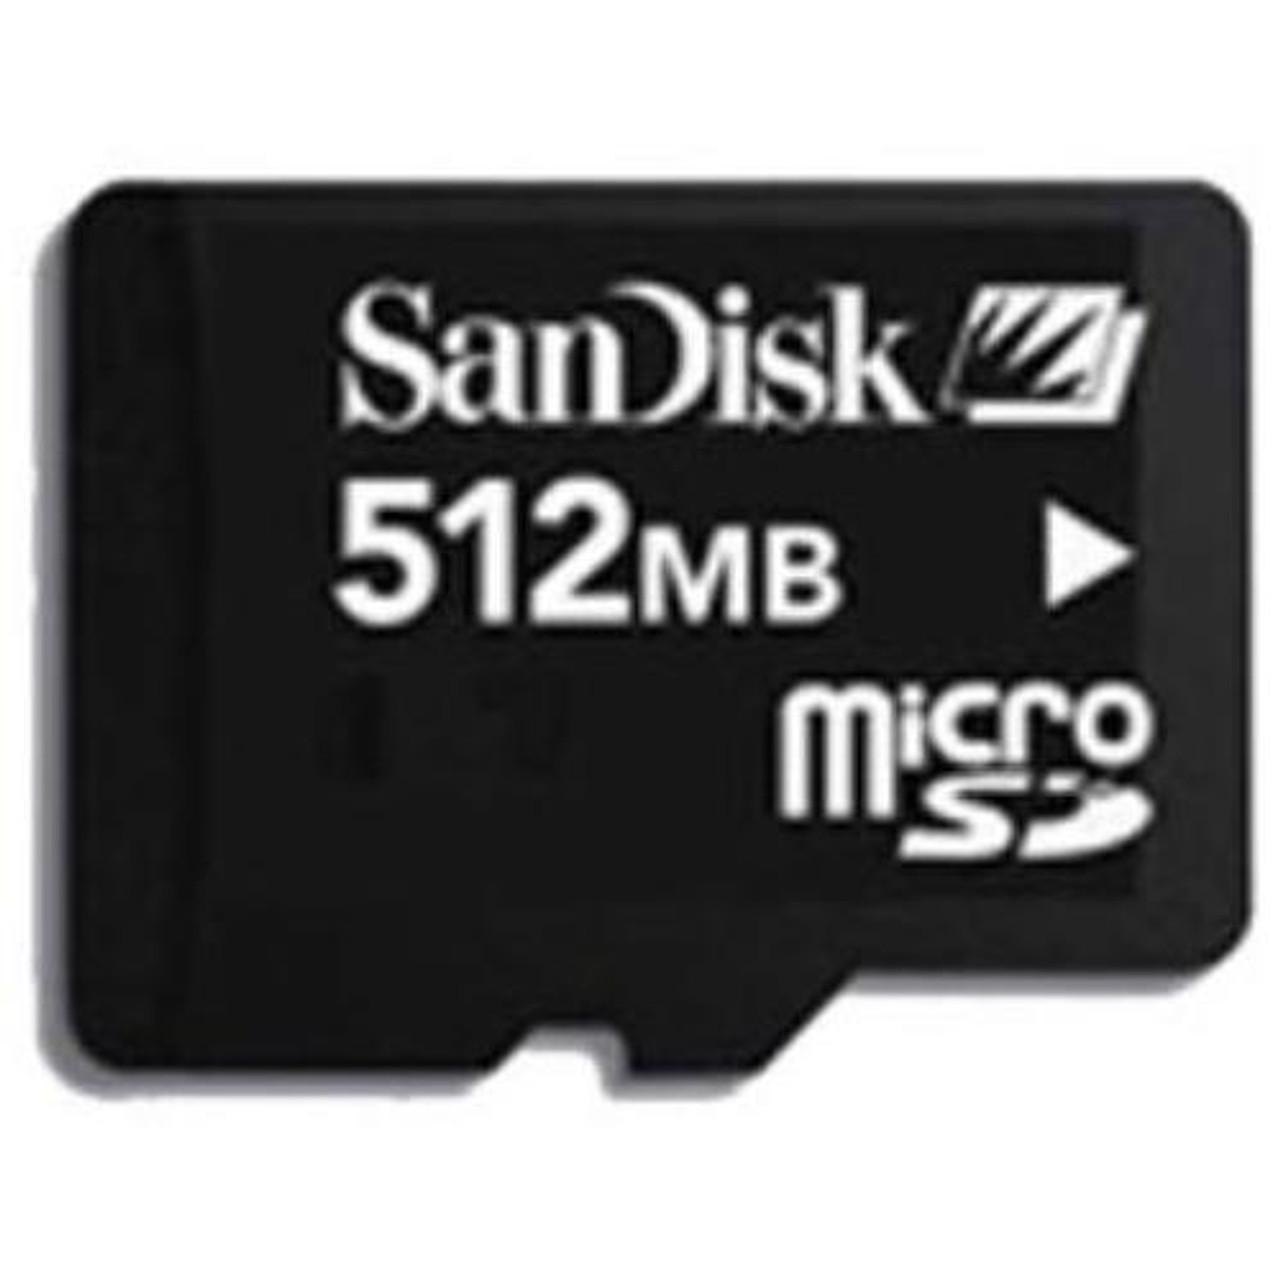 SDSDQ-512 SanDisk 512MB microSD Flash Memory Card